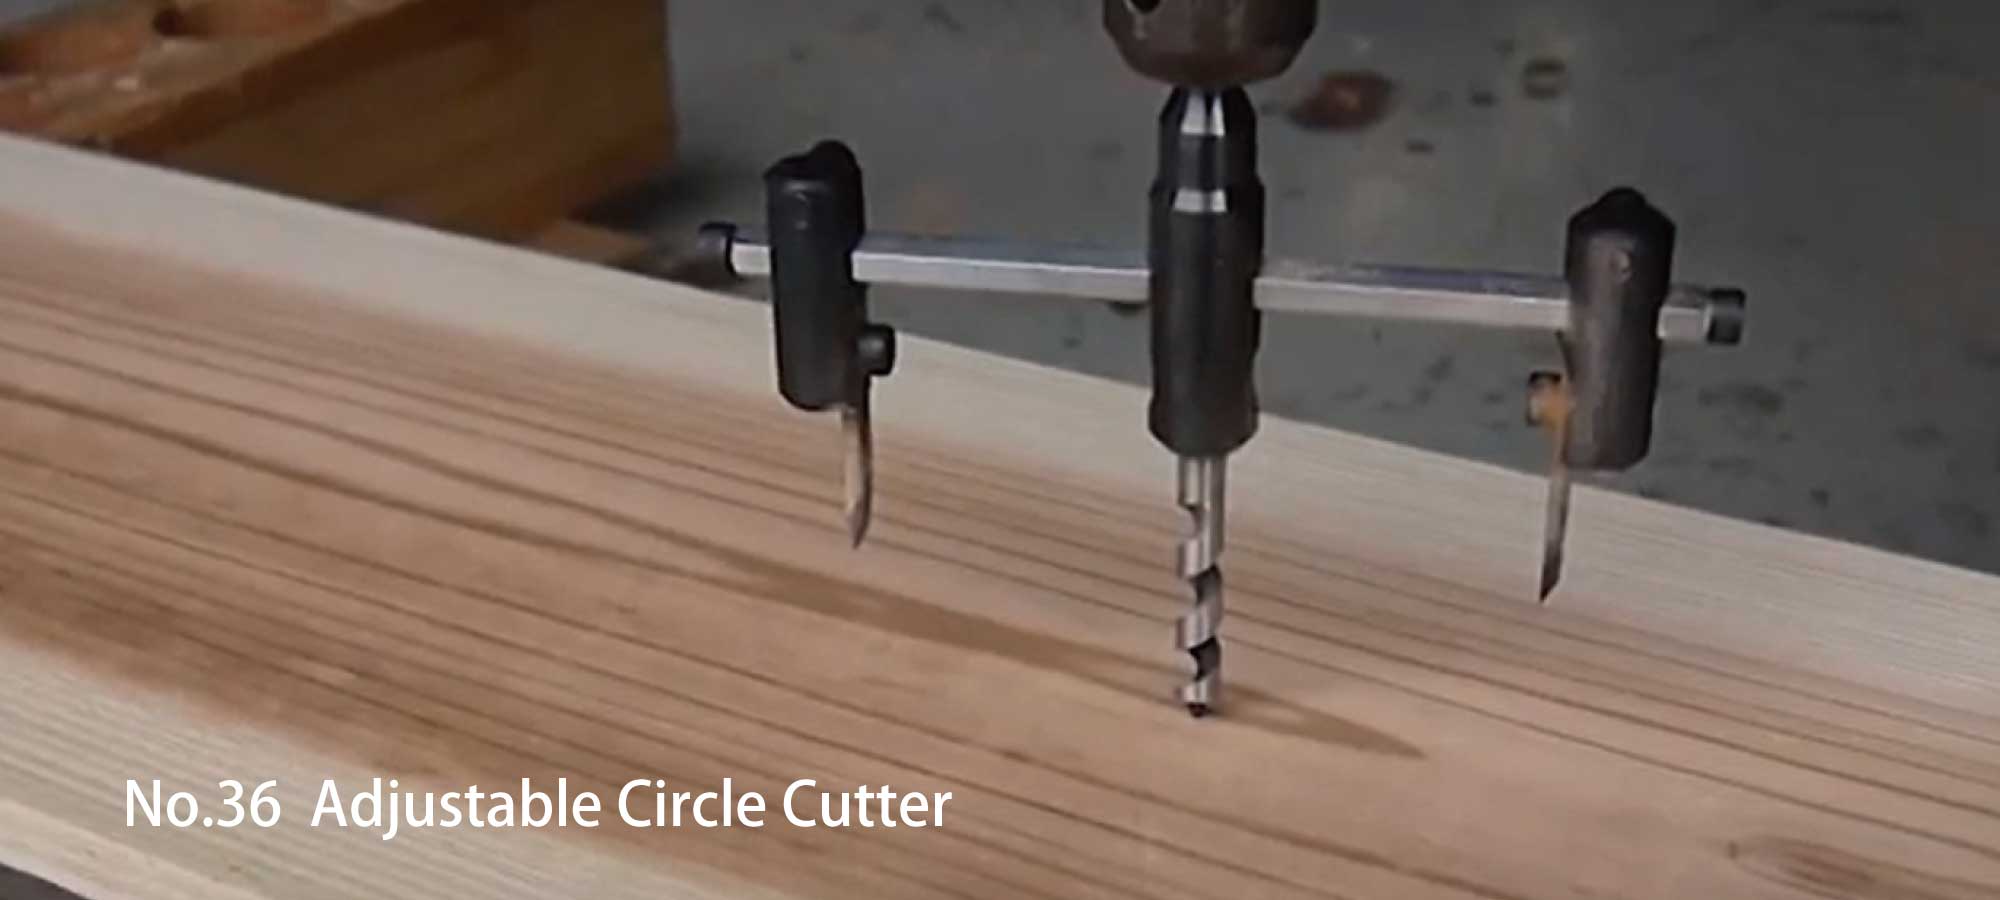 adjustable circle cutter